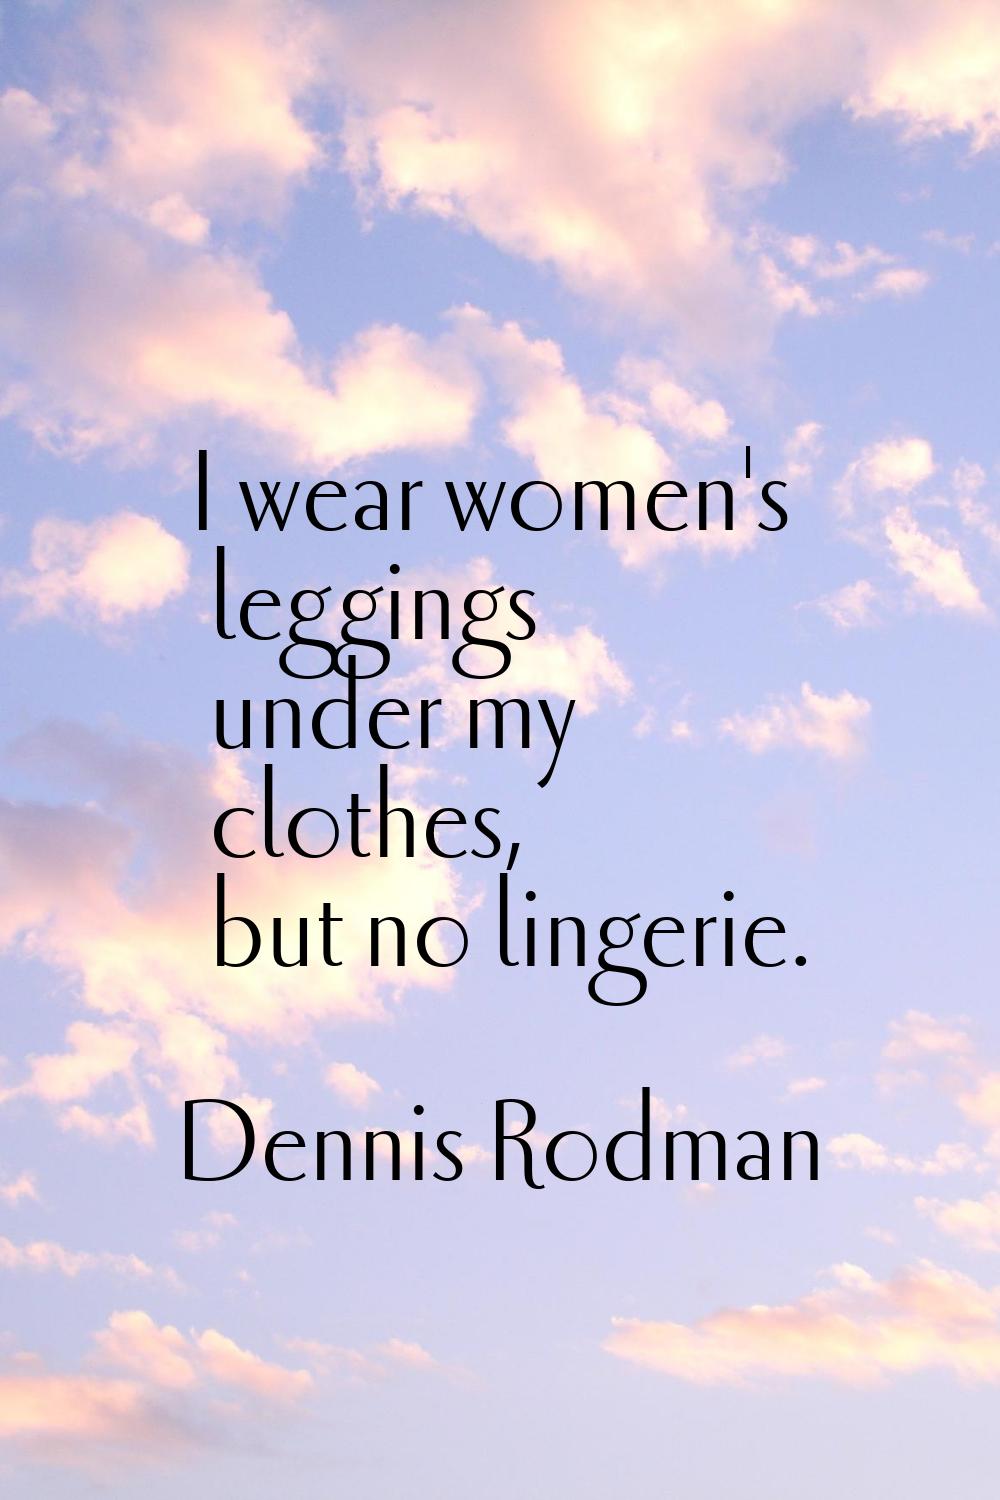 I wear women's leggings under my clothes, but no lingerie.